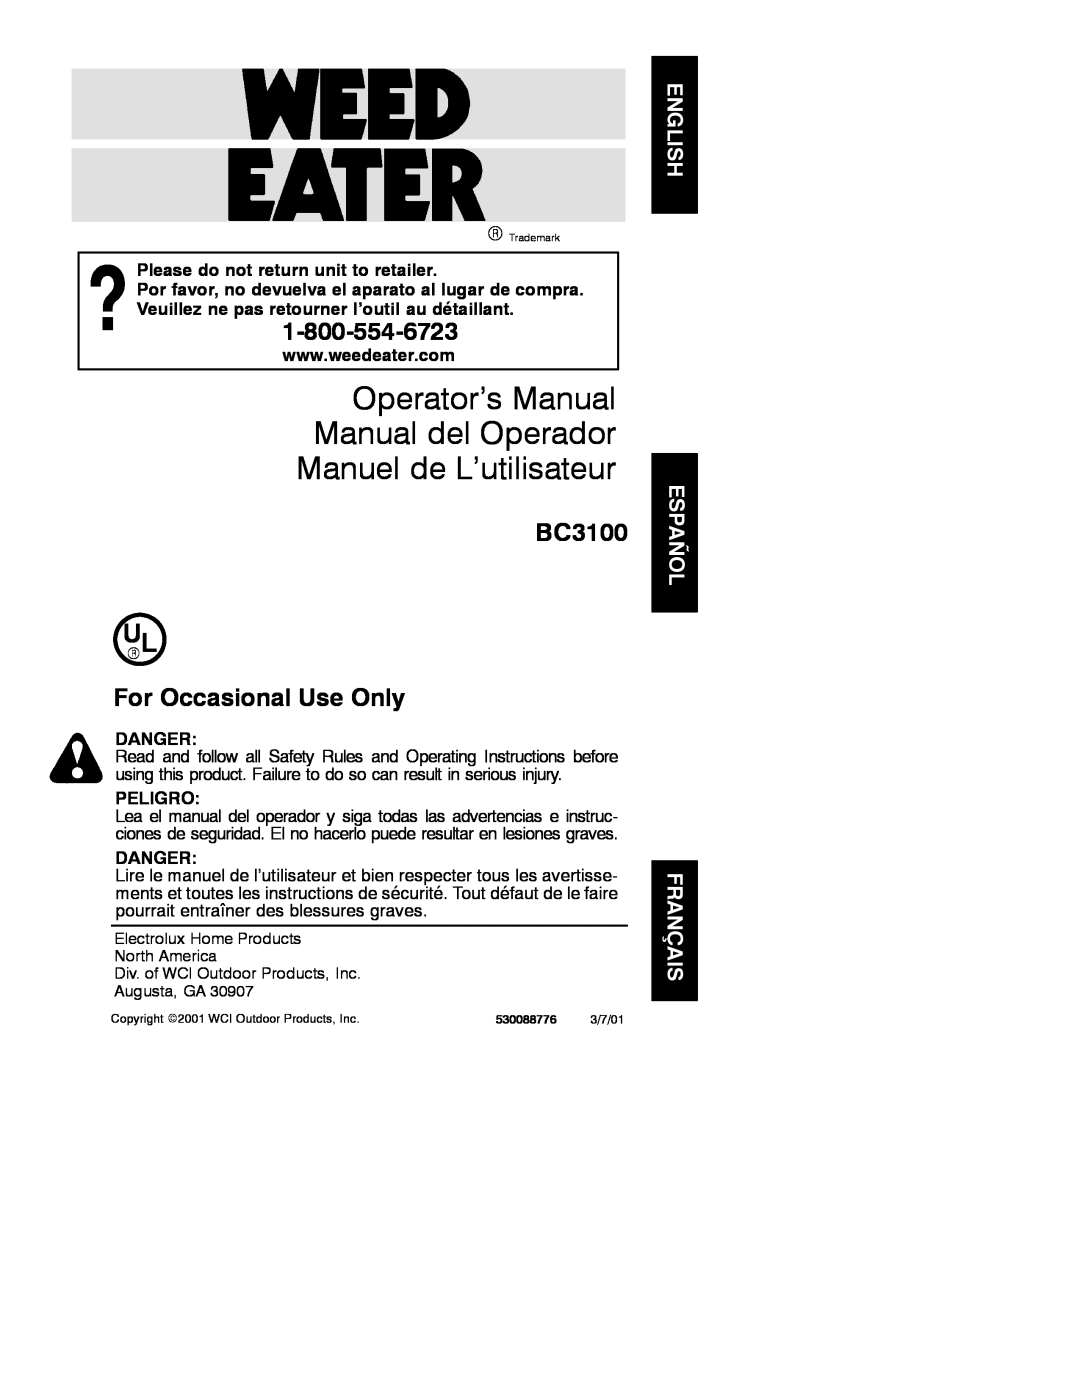 Weed Eater 530088776 manual Operator’s Manual Manual del Operador Manuel de L’utilisateur, BC3100, For Occasional Use Only 